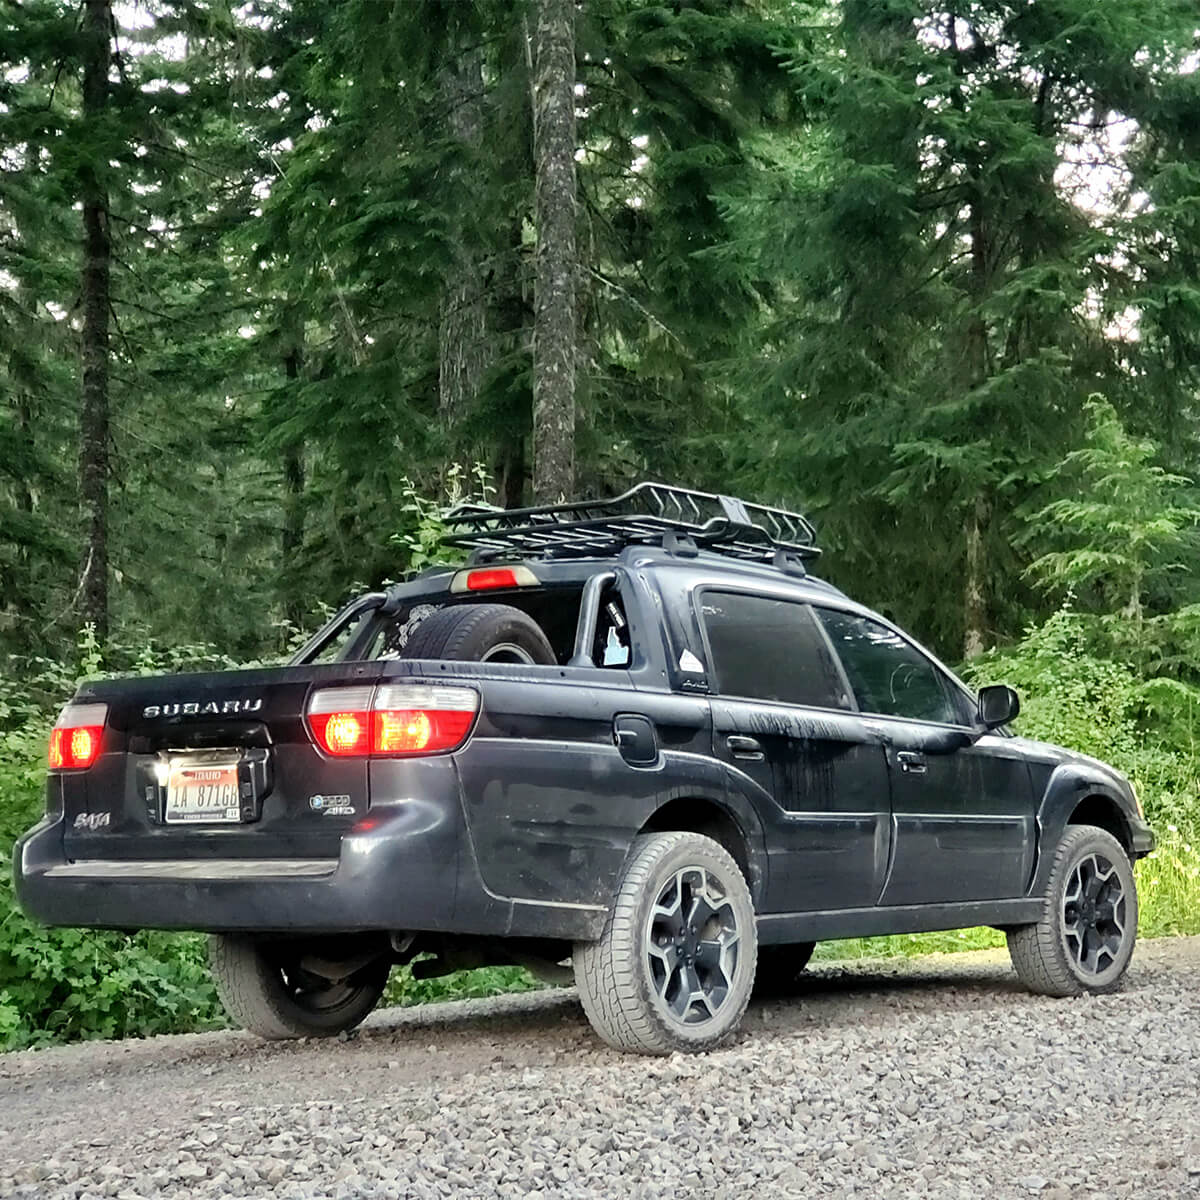 Subaru Baja pickup truck off-road adventures